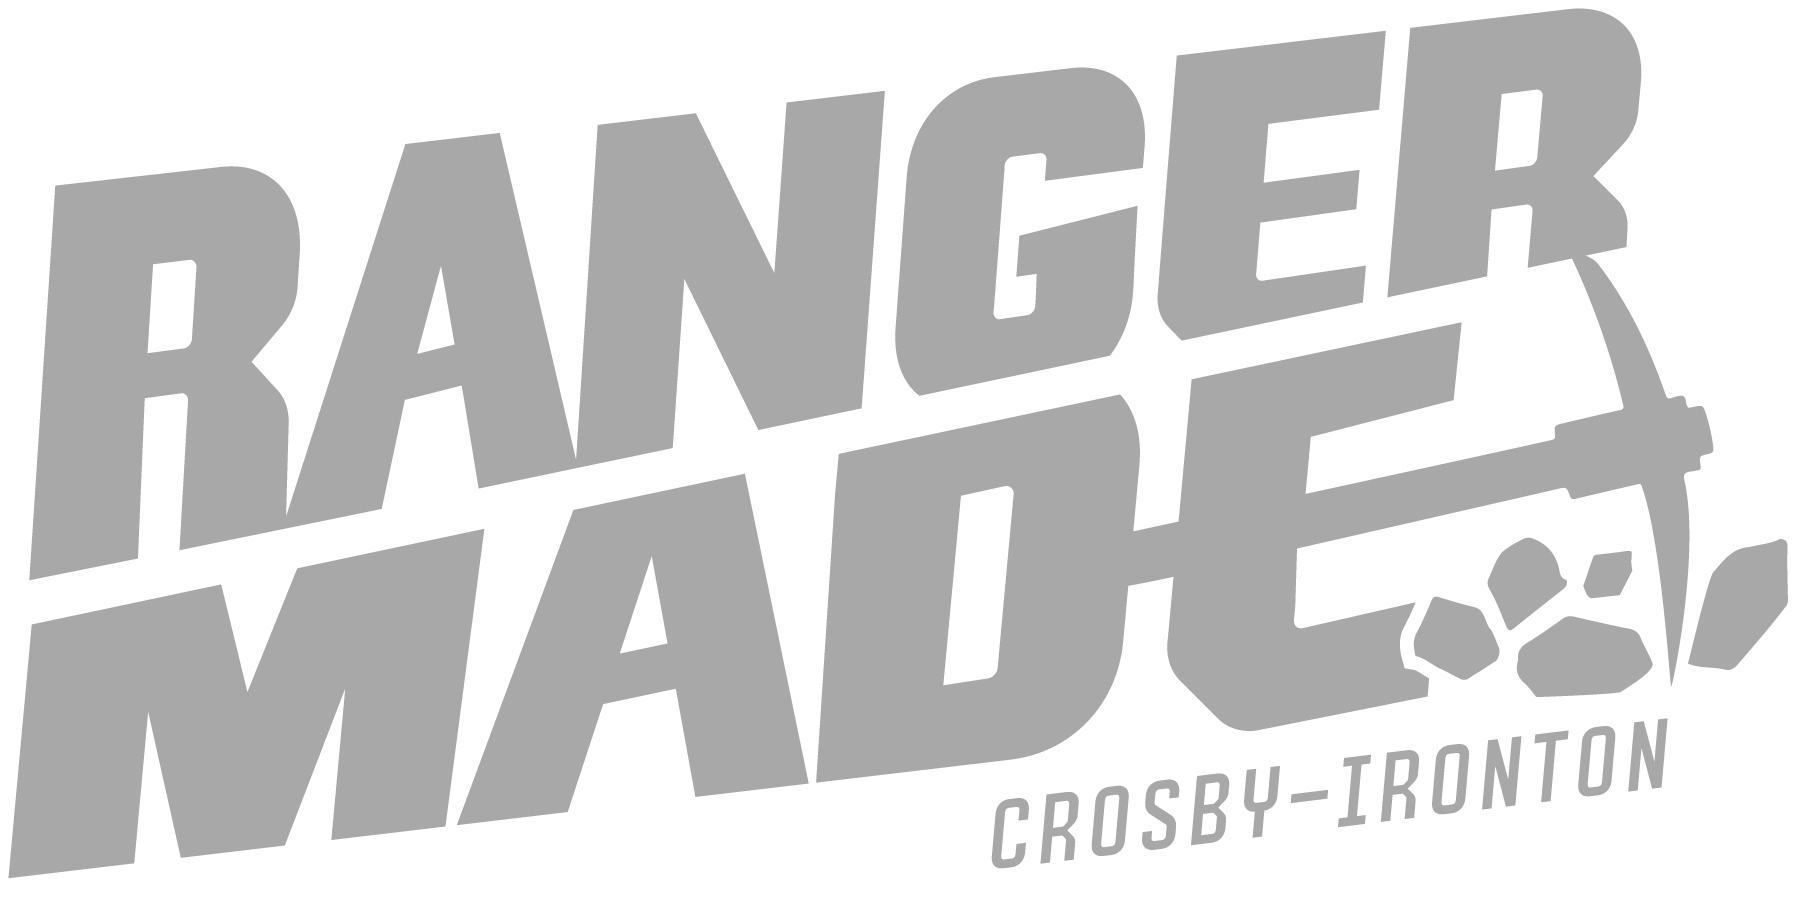 RangerMade_Logo_wCrosbyIronton.jpg